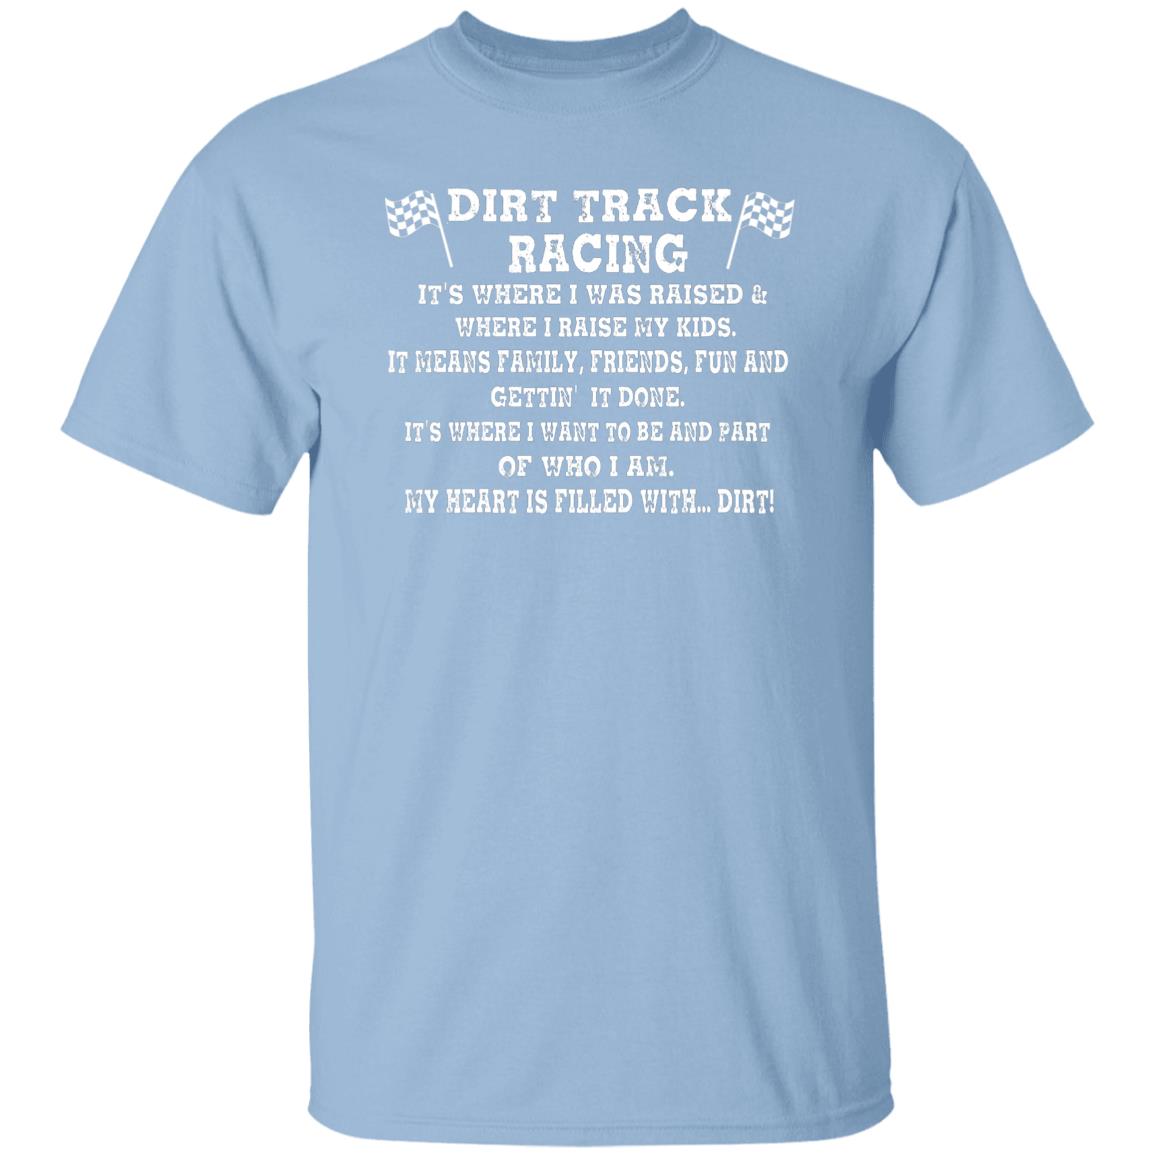 Dirt Track Racing It's Where I Was Raised 5.3 oz. T-Shirt